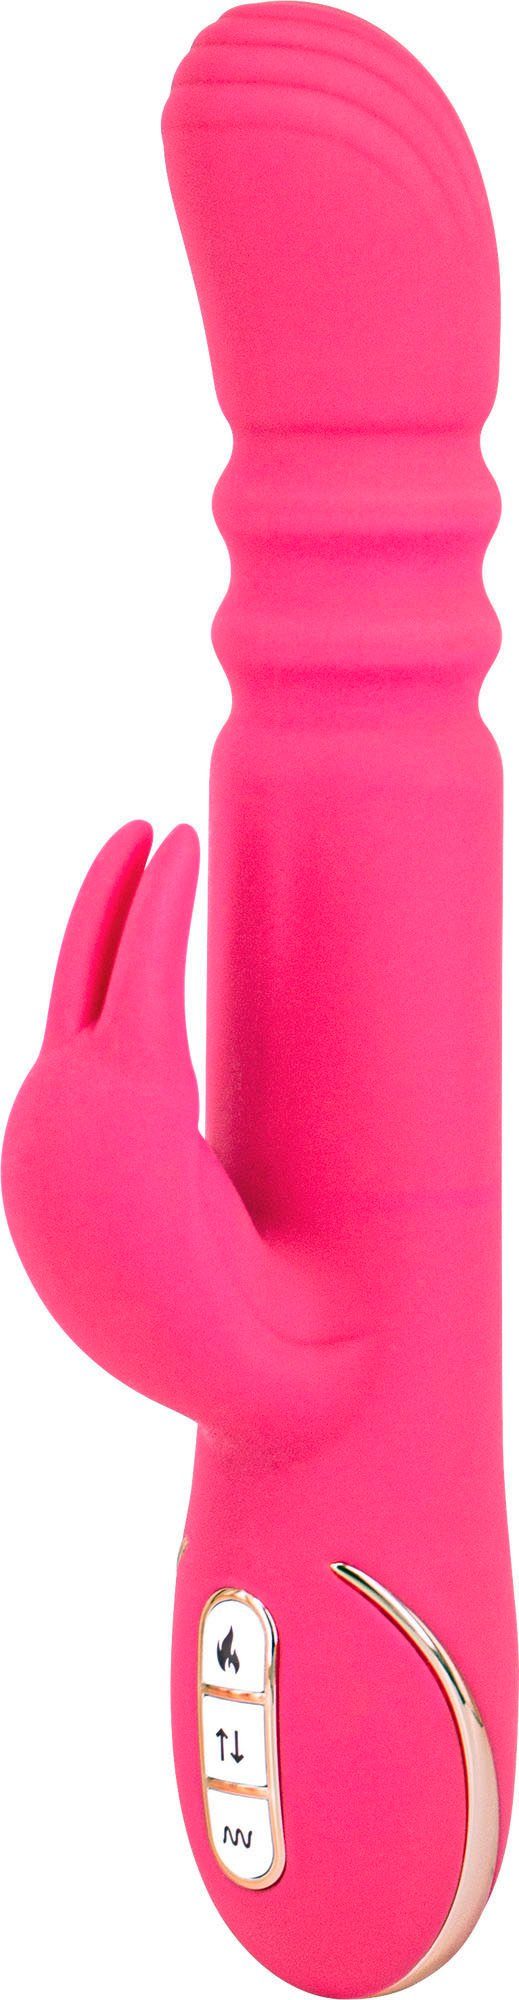 Vibe Couture Rabbit-Vibrator Ablaze pink